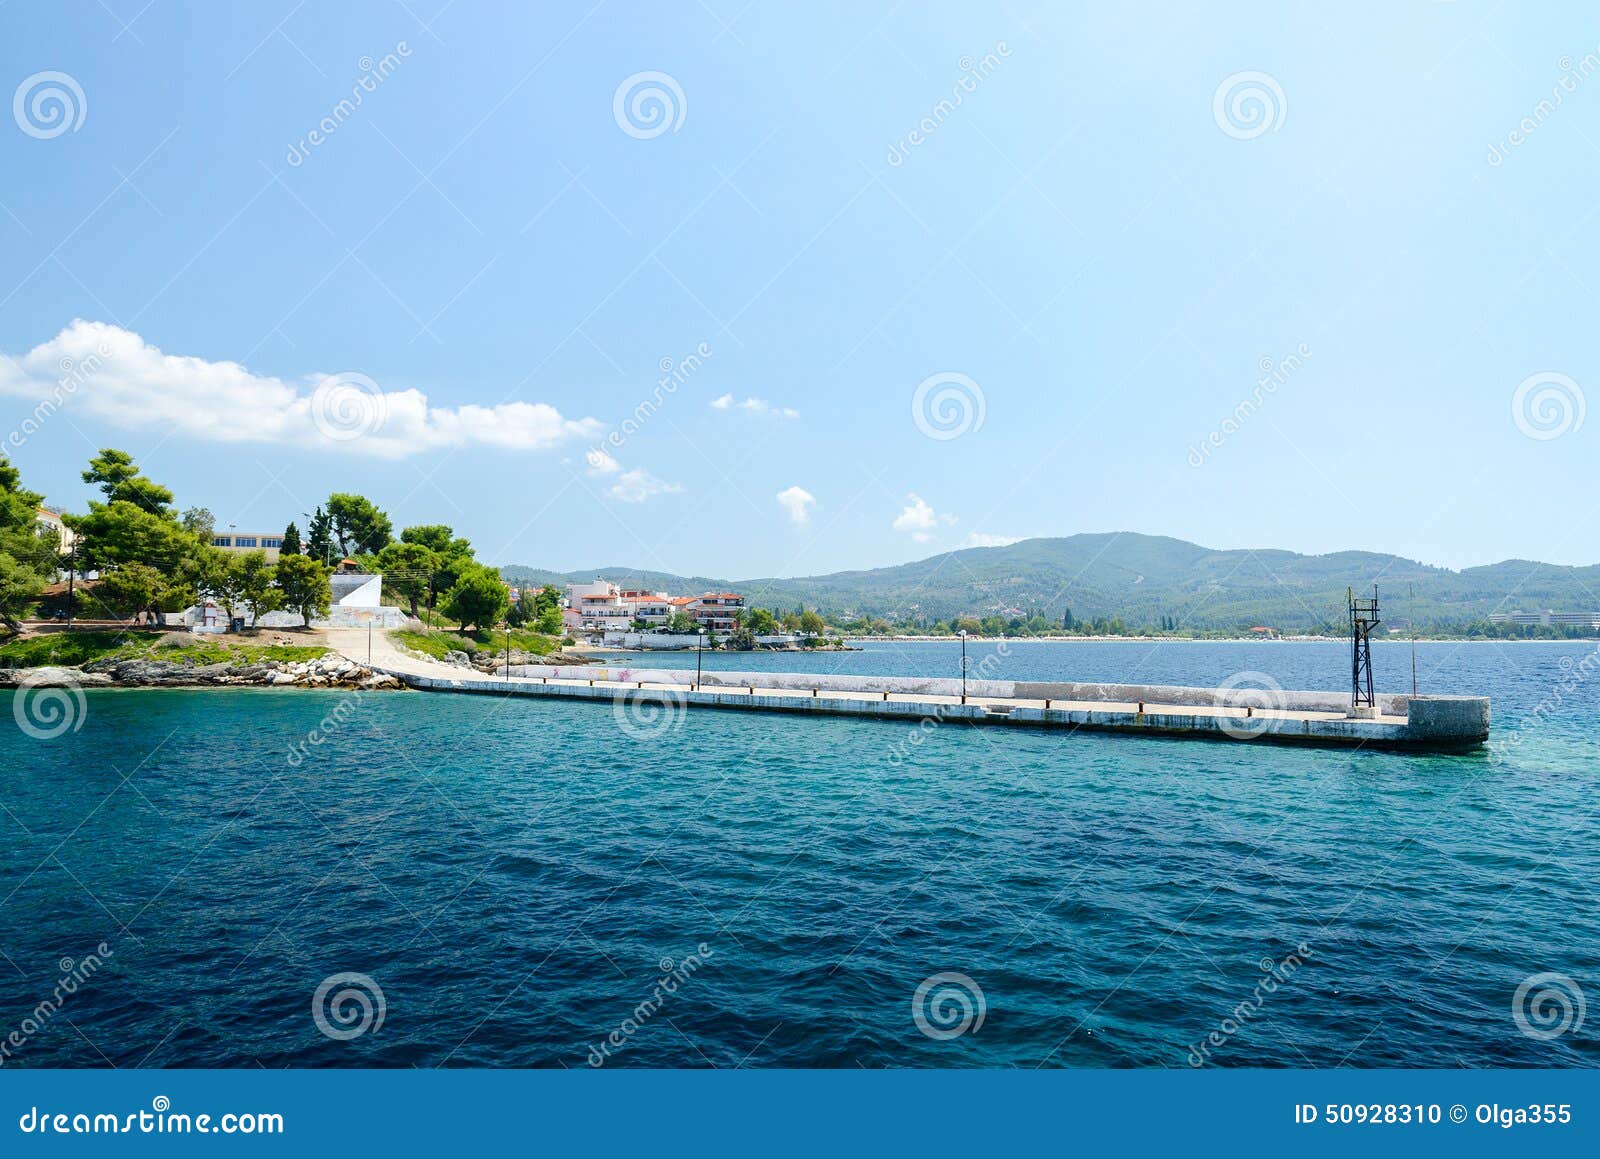 Greece, Sithonia, Old Pier in Neos Marmaras Stock Photo - Image of ...